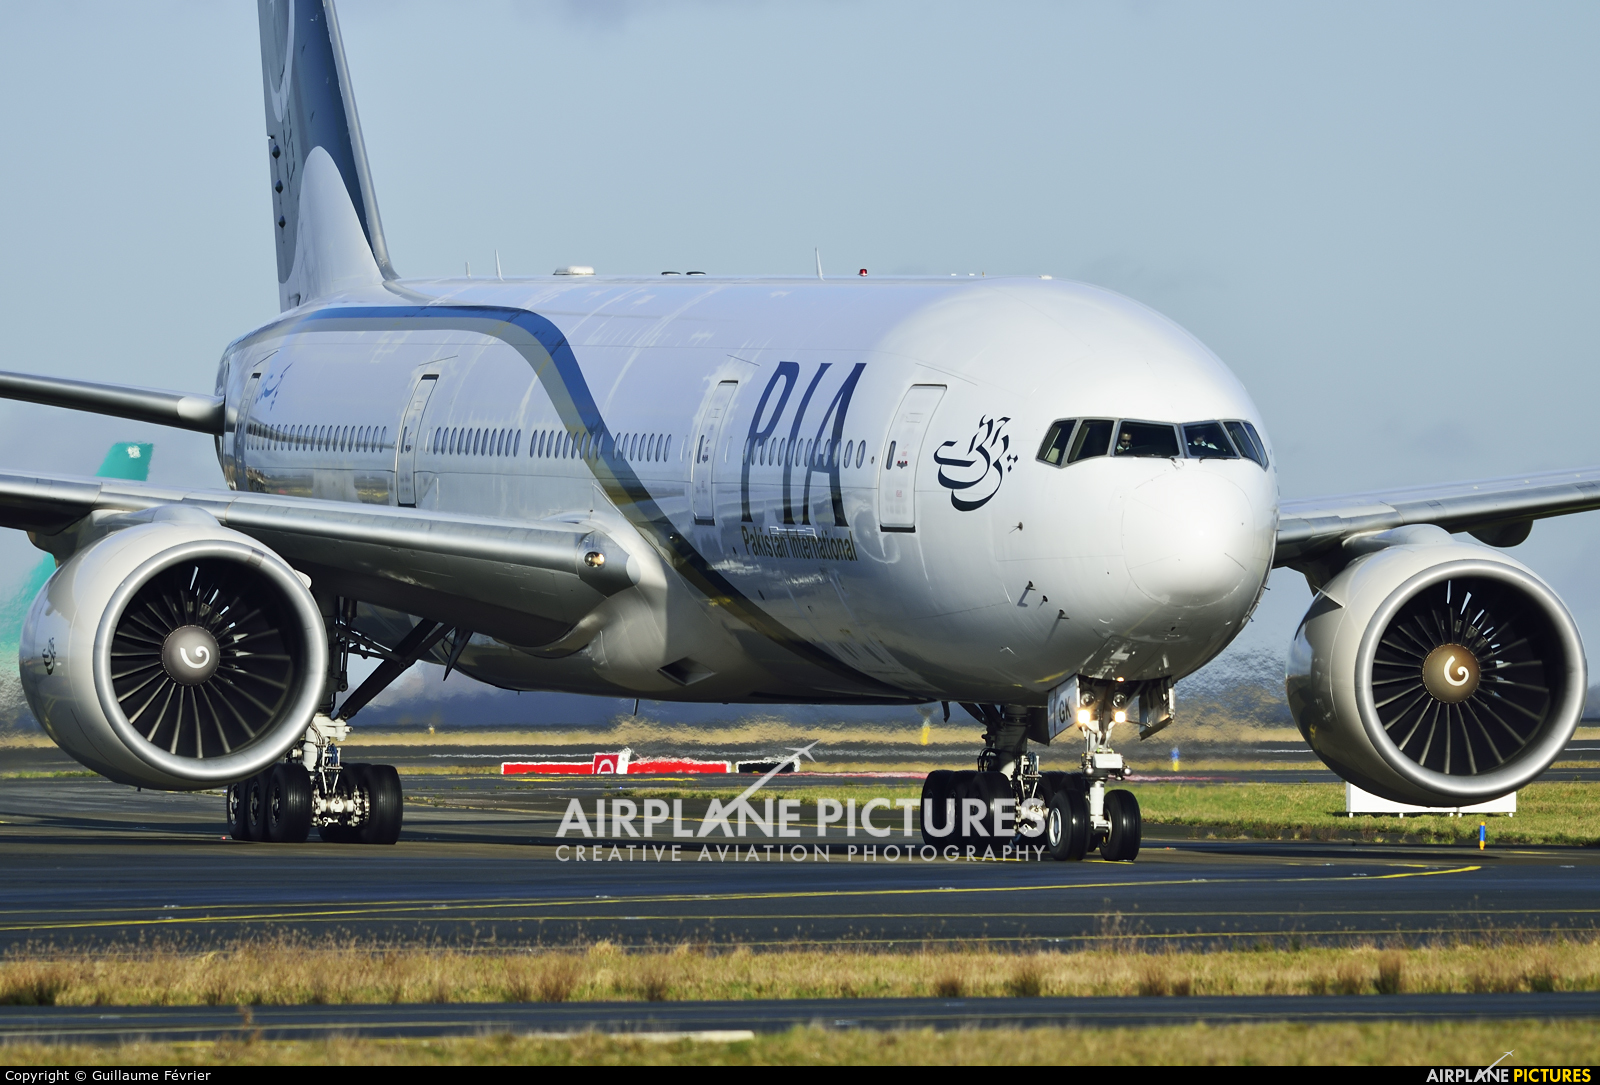 PIA - Pakistan International Airlines AP-BGK aircraft at Paris - Charles de Gaulle